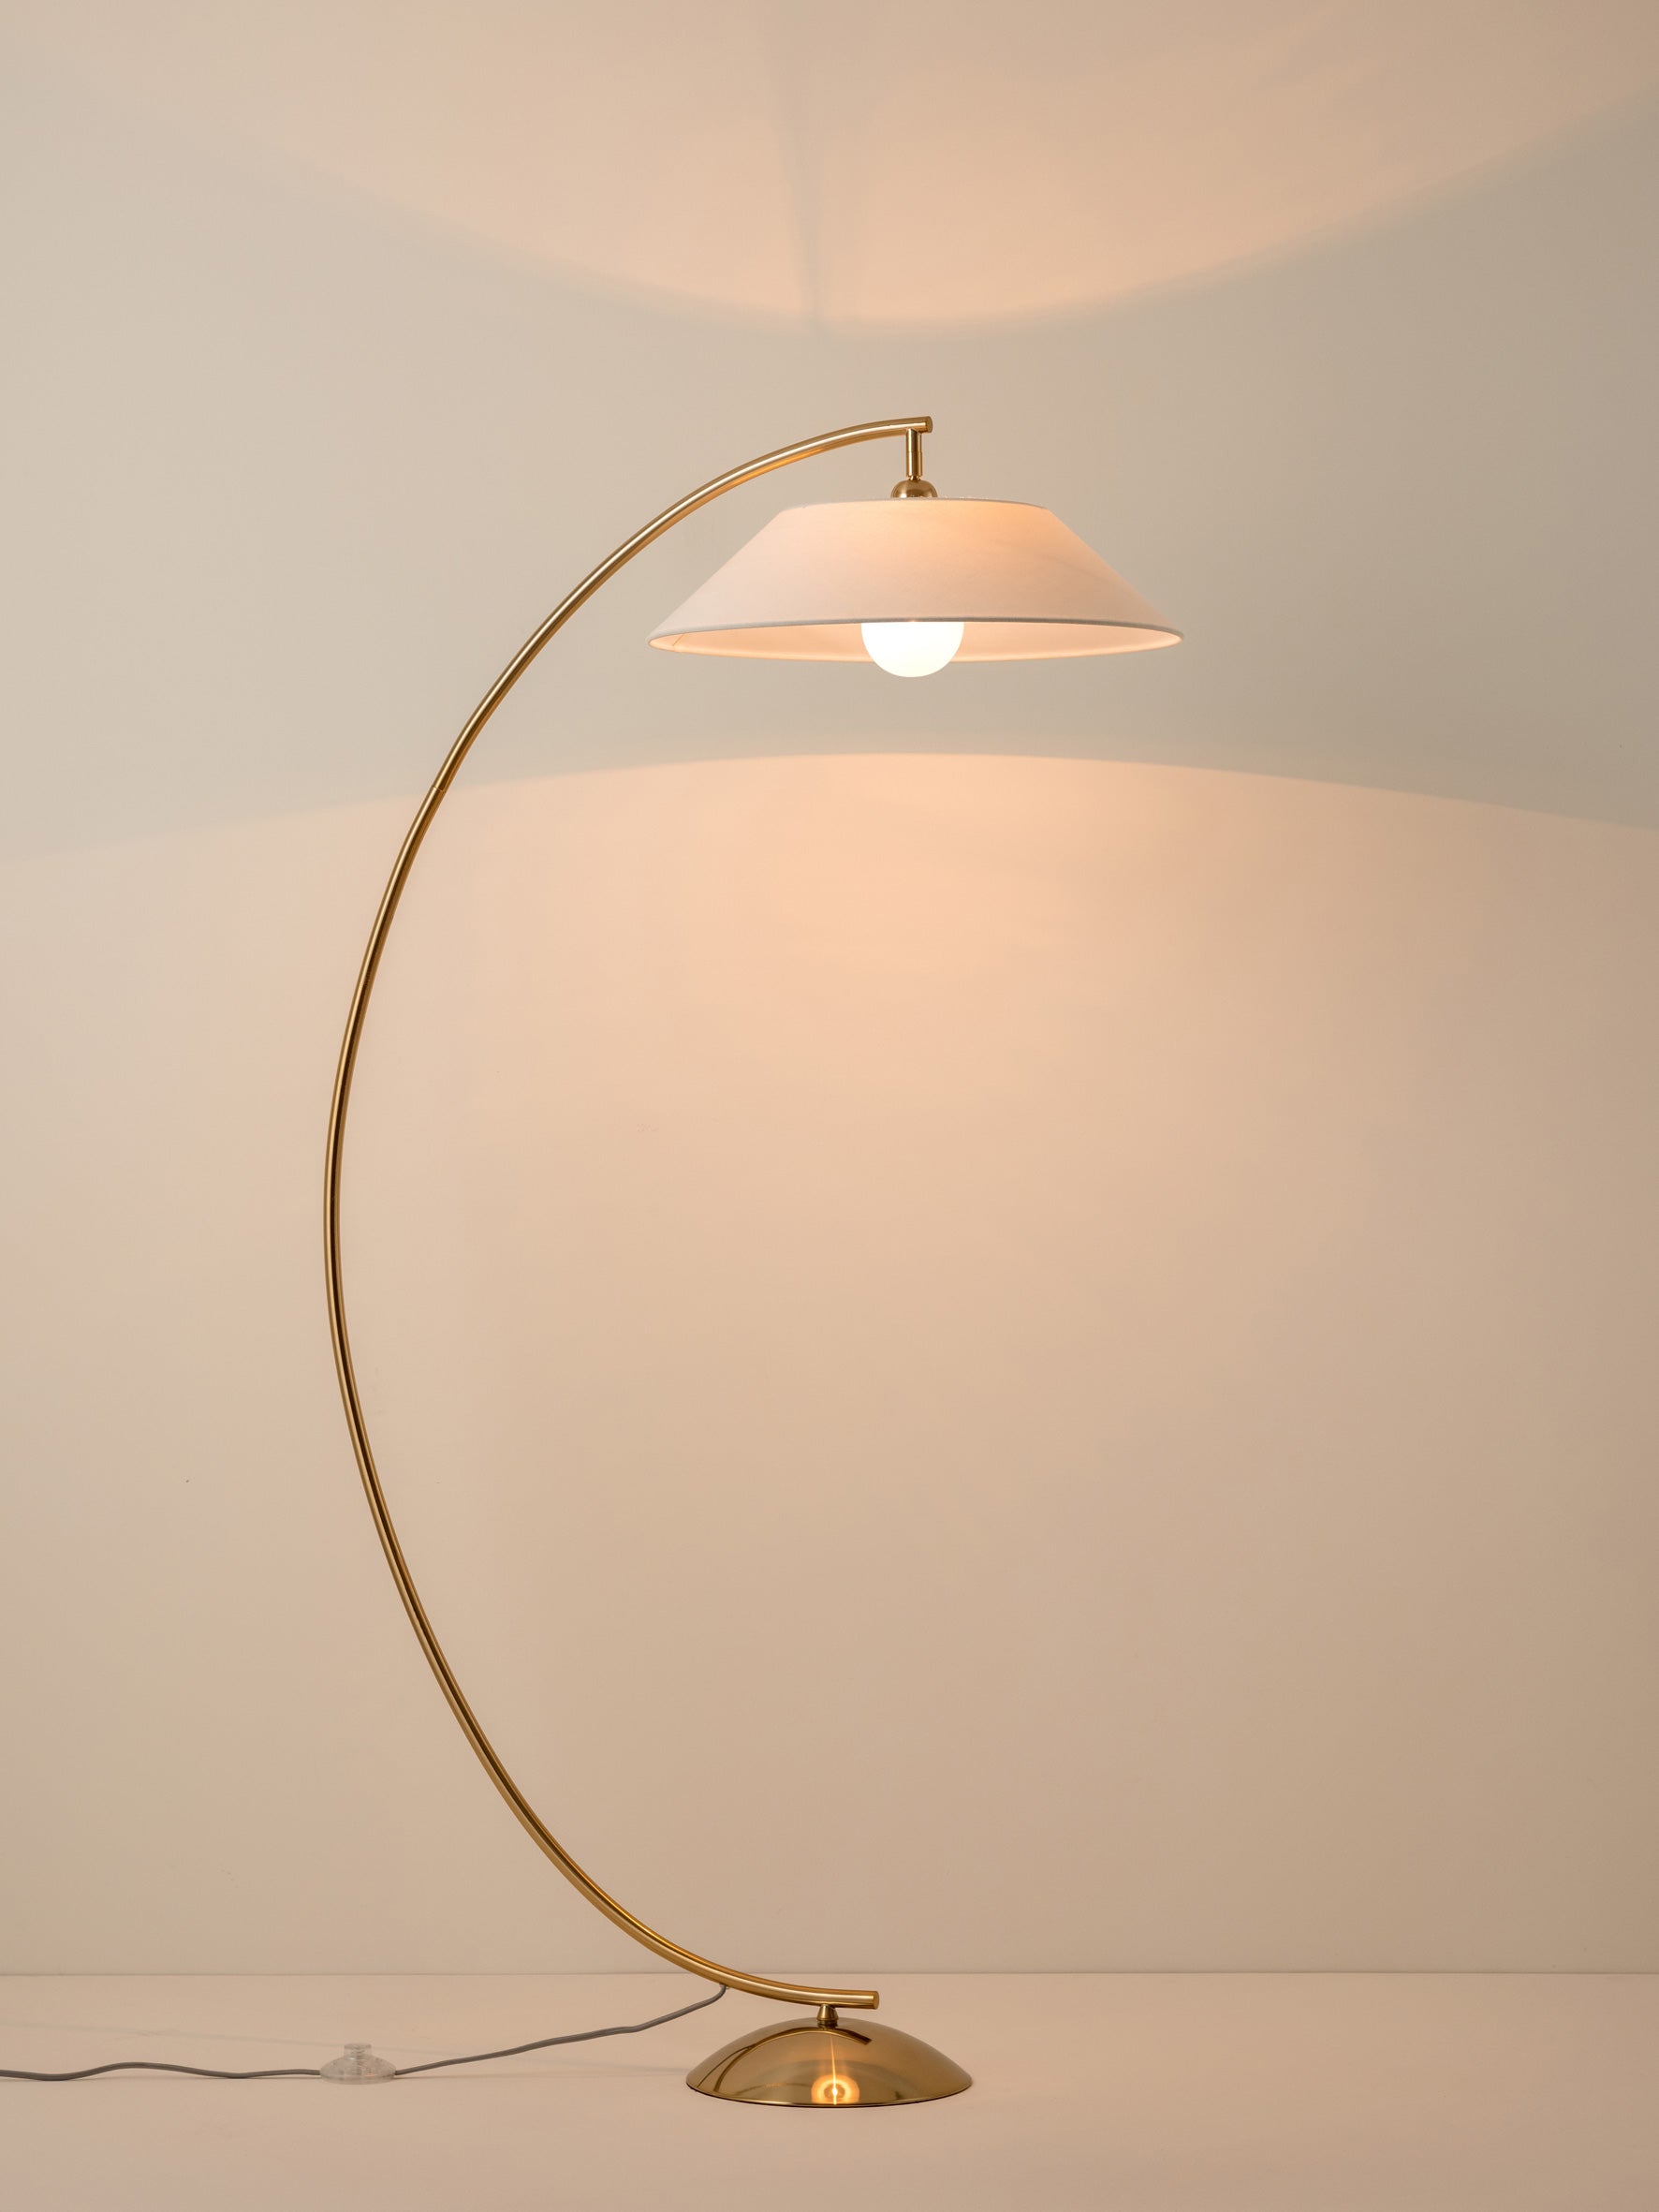 Circo - 1 light arc brass and natural linen floor lamp | Floor Lamp | Lights & Lamps Inc | Modern Affordable Designer Lighting | USA